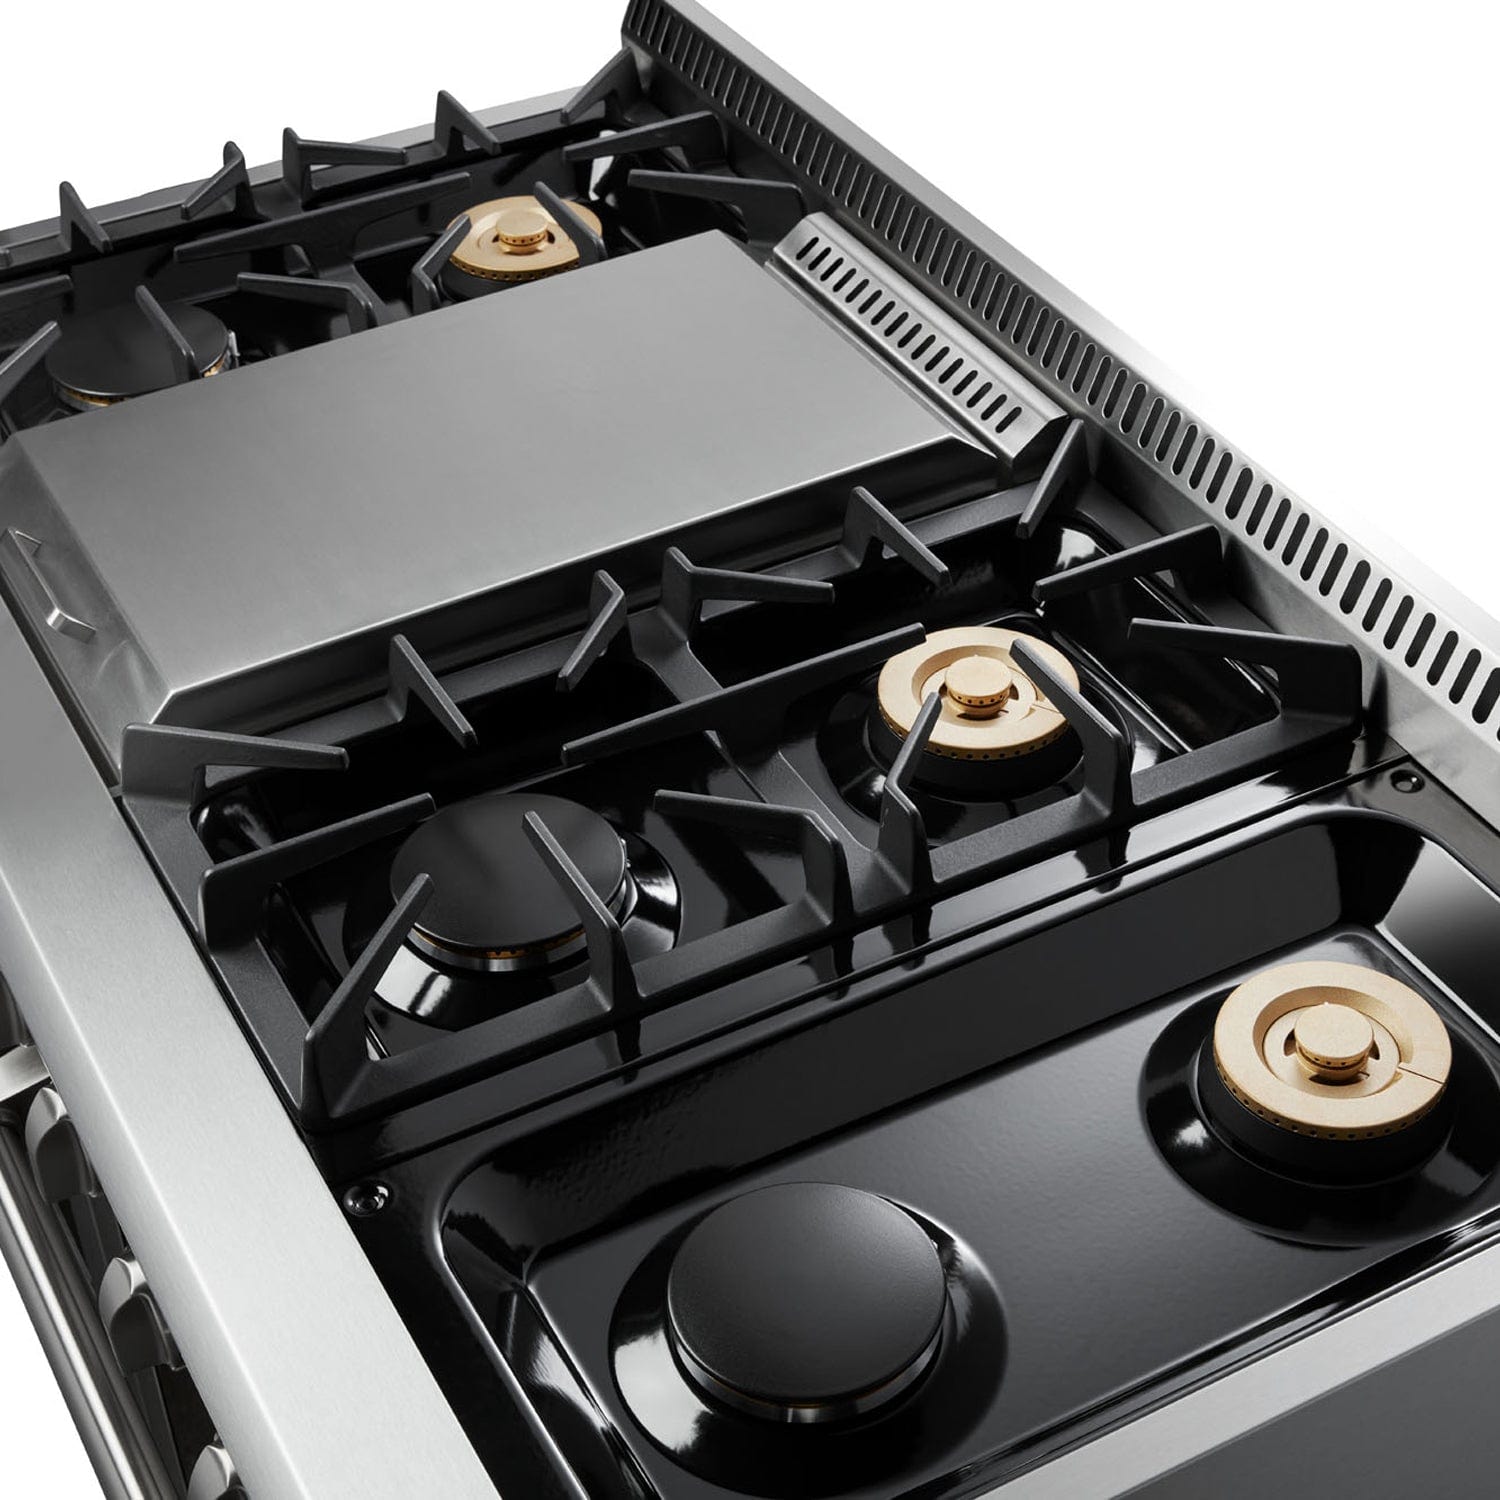 Thor Kitchen 48 in. 6.7 cu. ft. Professional Propane Gas Range in Stainless Steel HRG4808ULP Ranges HRG4808ULP Luxury Appliances Direct